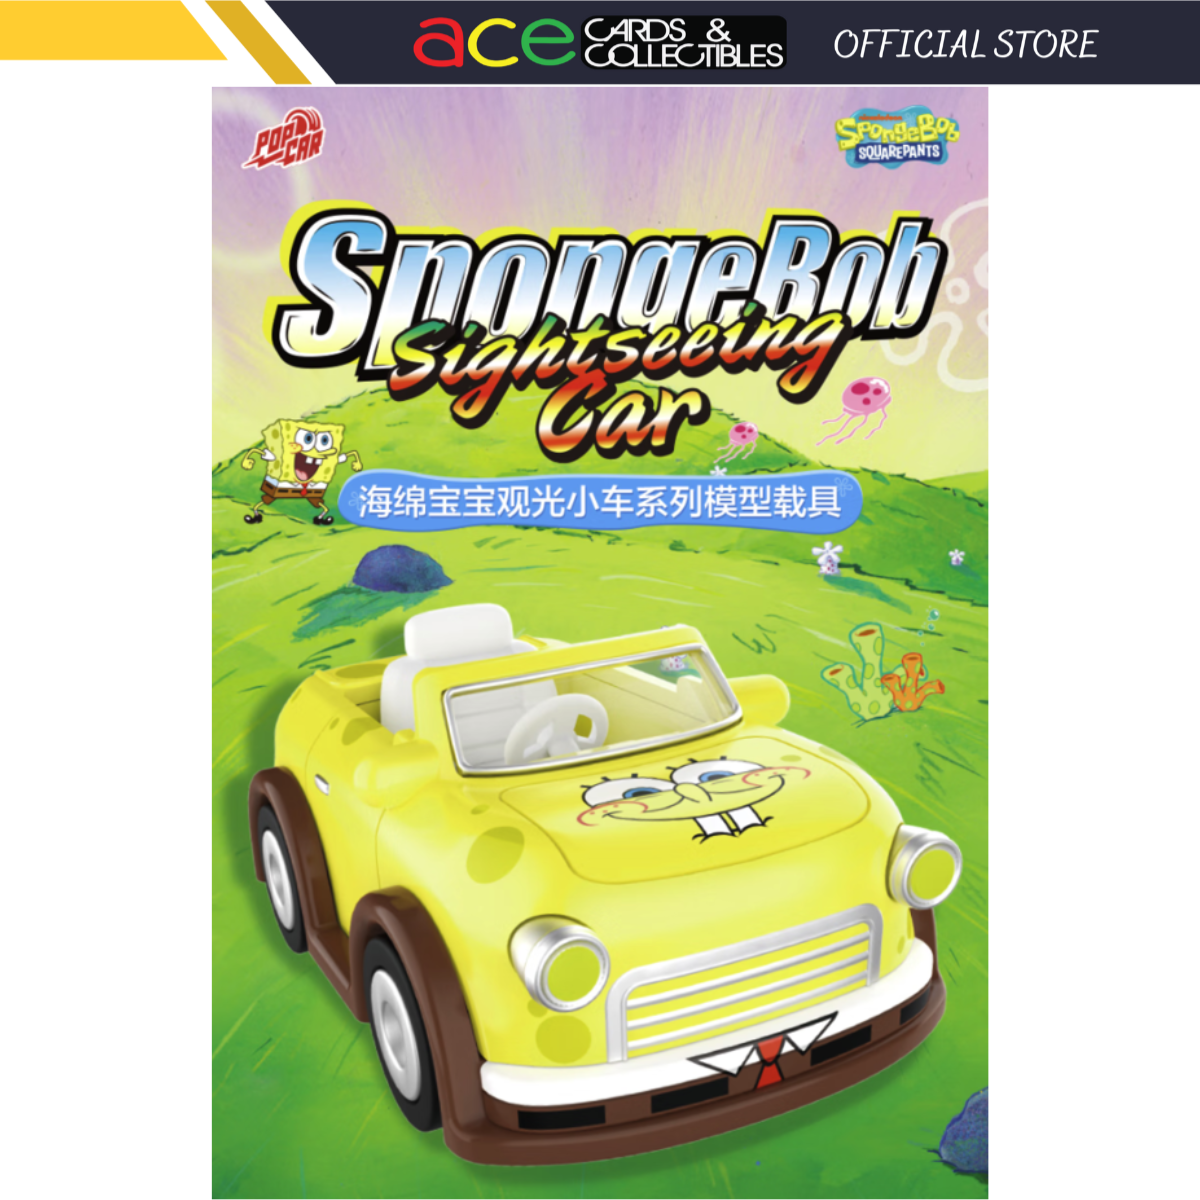 Pop Mart SpongeBob Sightseeing Car Series-Single Box (Random)-Pop Mart-Ace Cards &amp; Collectibles